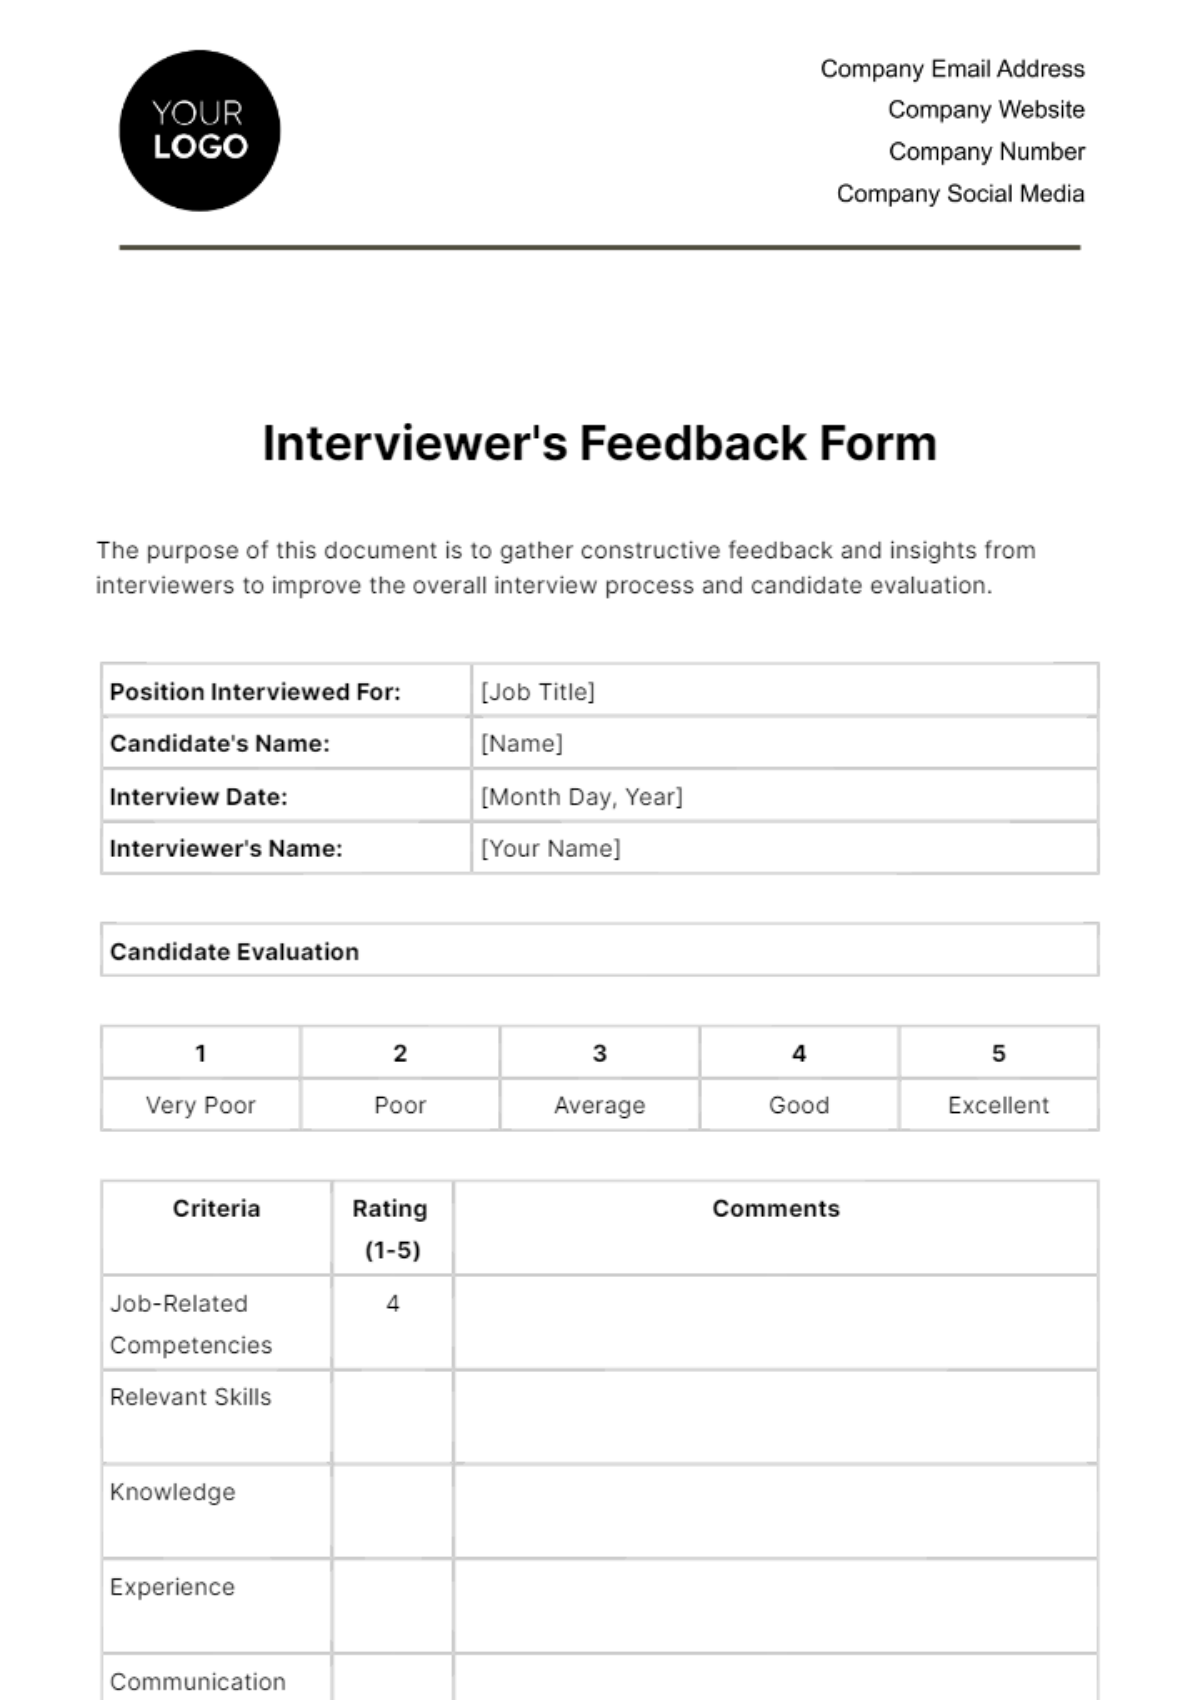 Interviewer's Feedback Form HR Template